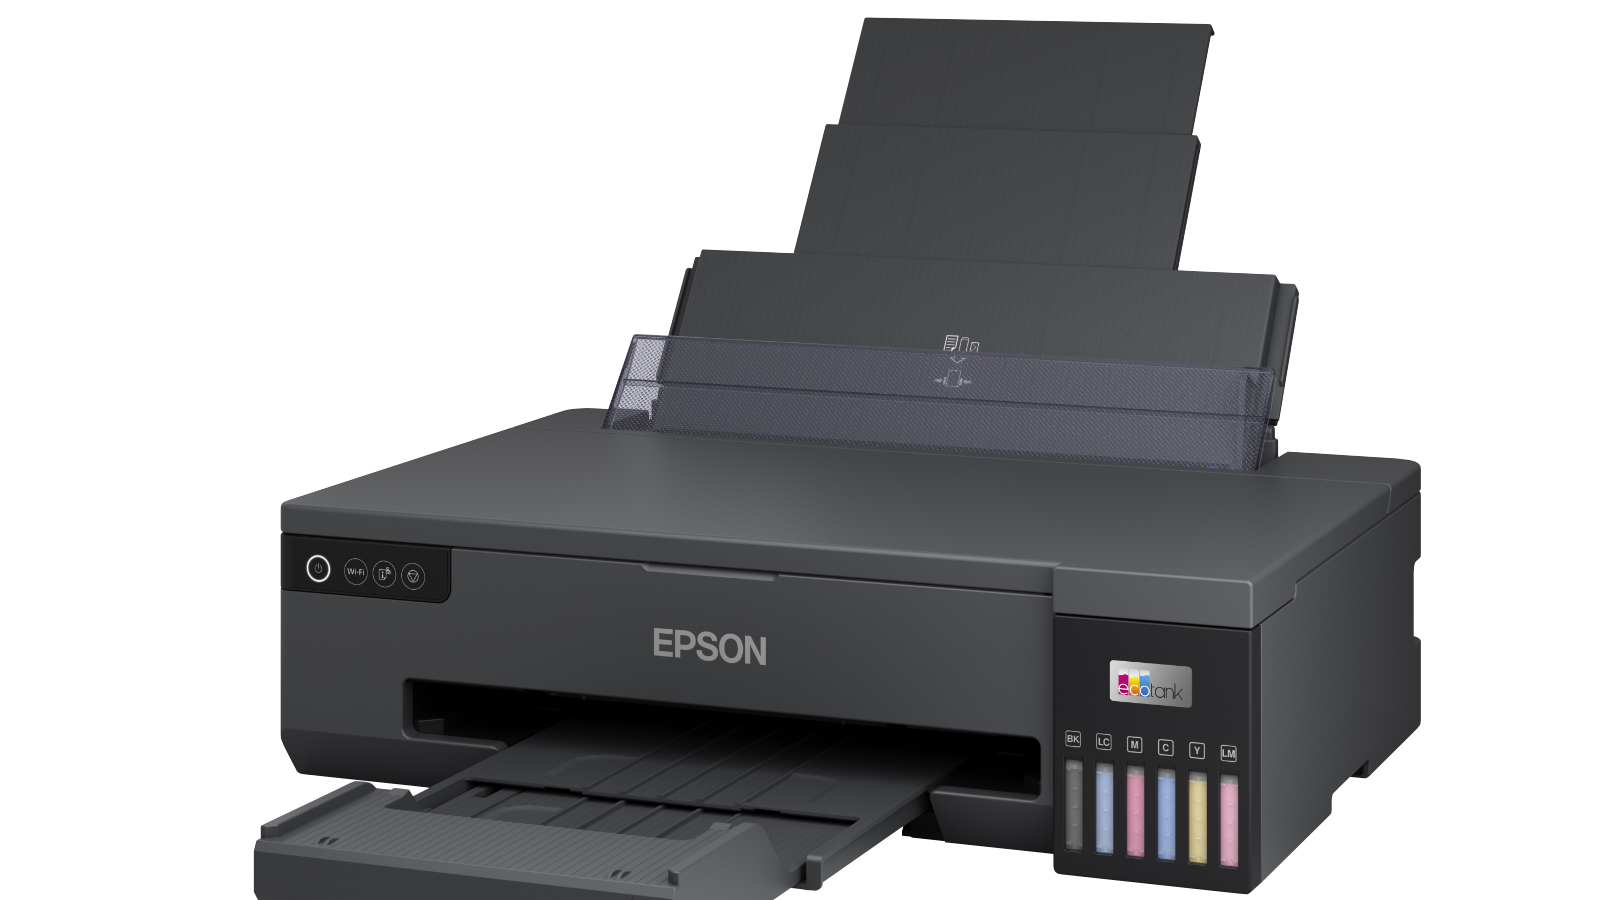 Epson Ecotank Et 18100 A3 Photo Printer Review Techradar 1206